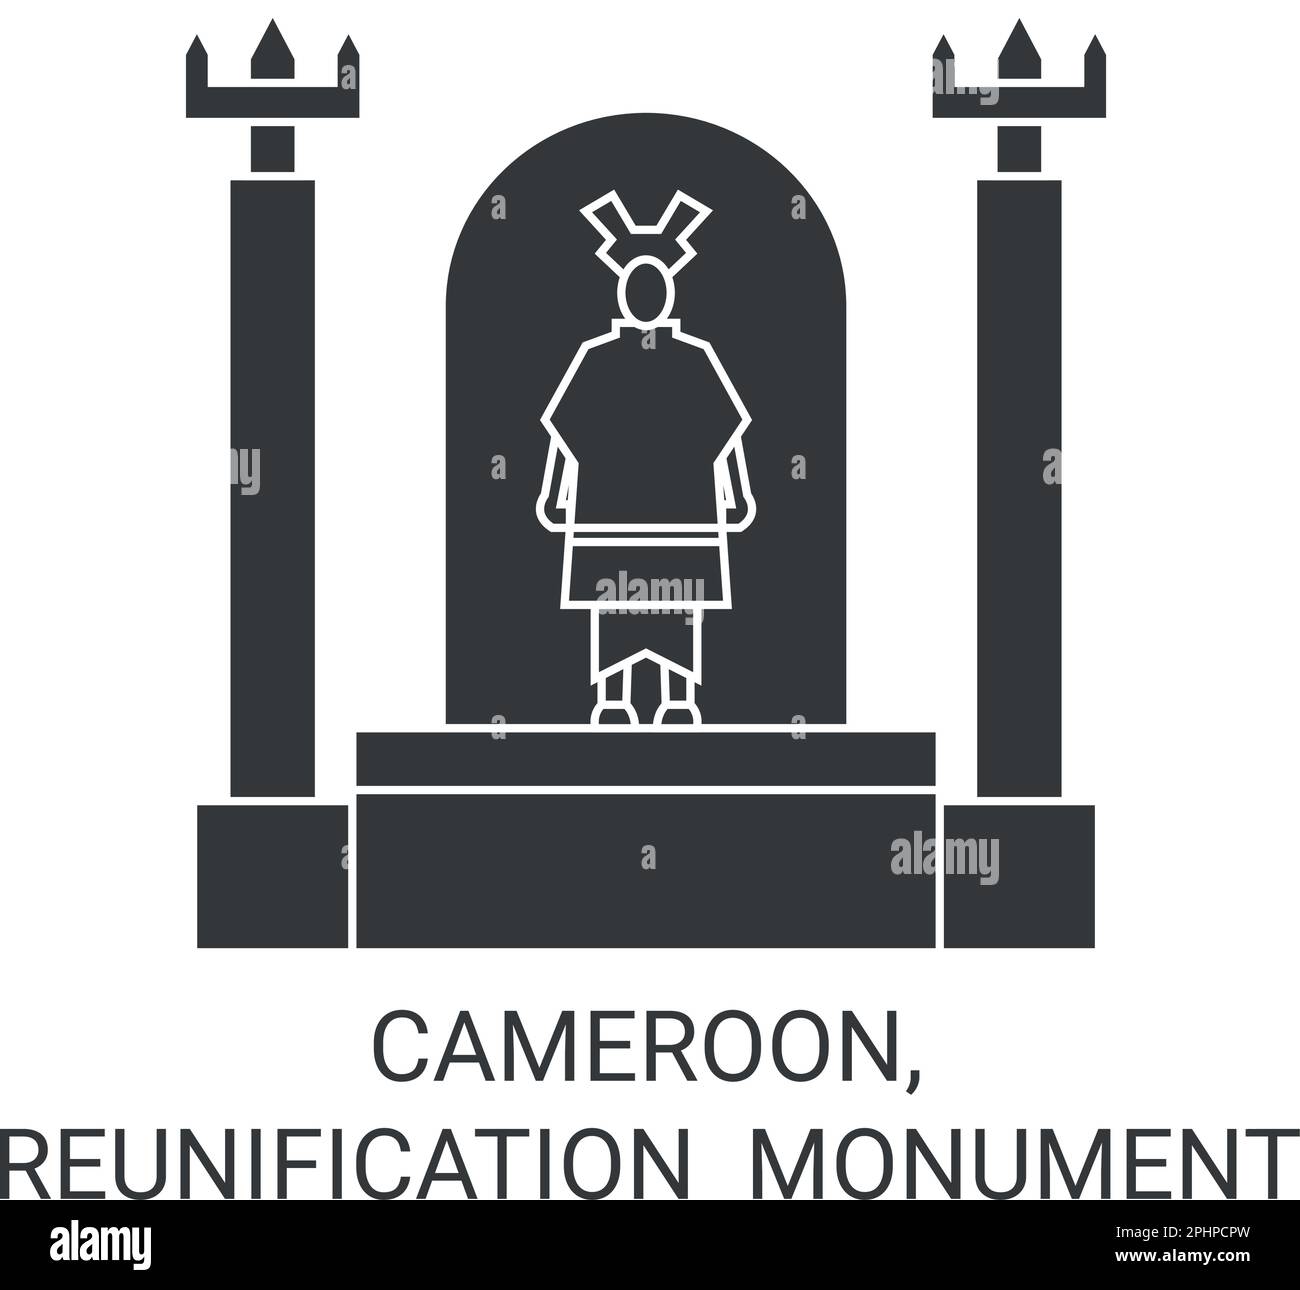 Cameroon, Reunification Monument travel landmark vector illustration Stock Vector